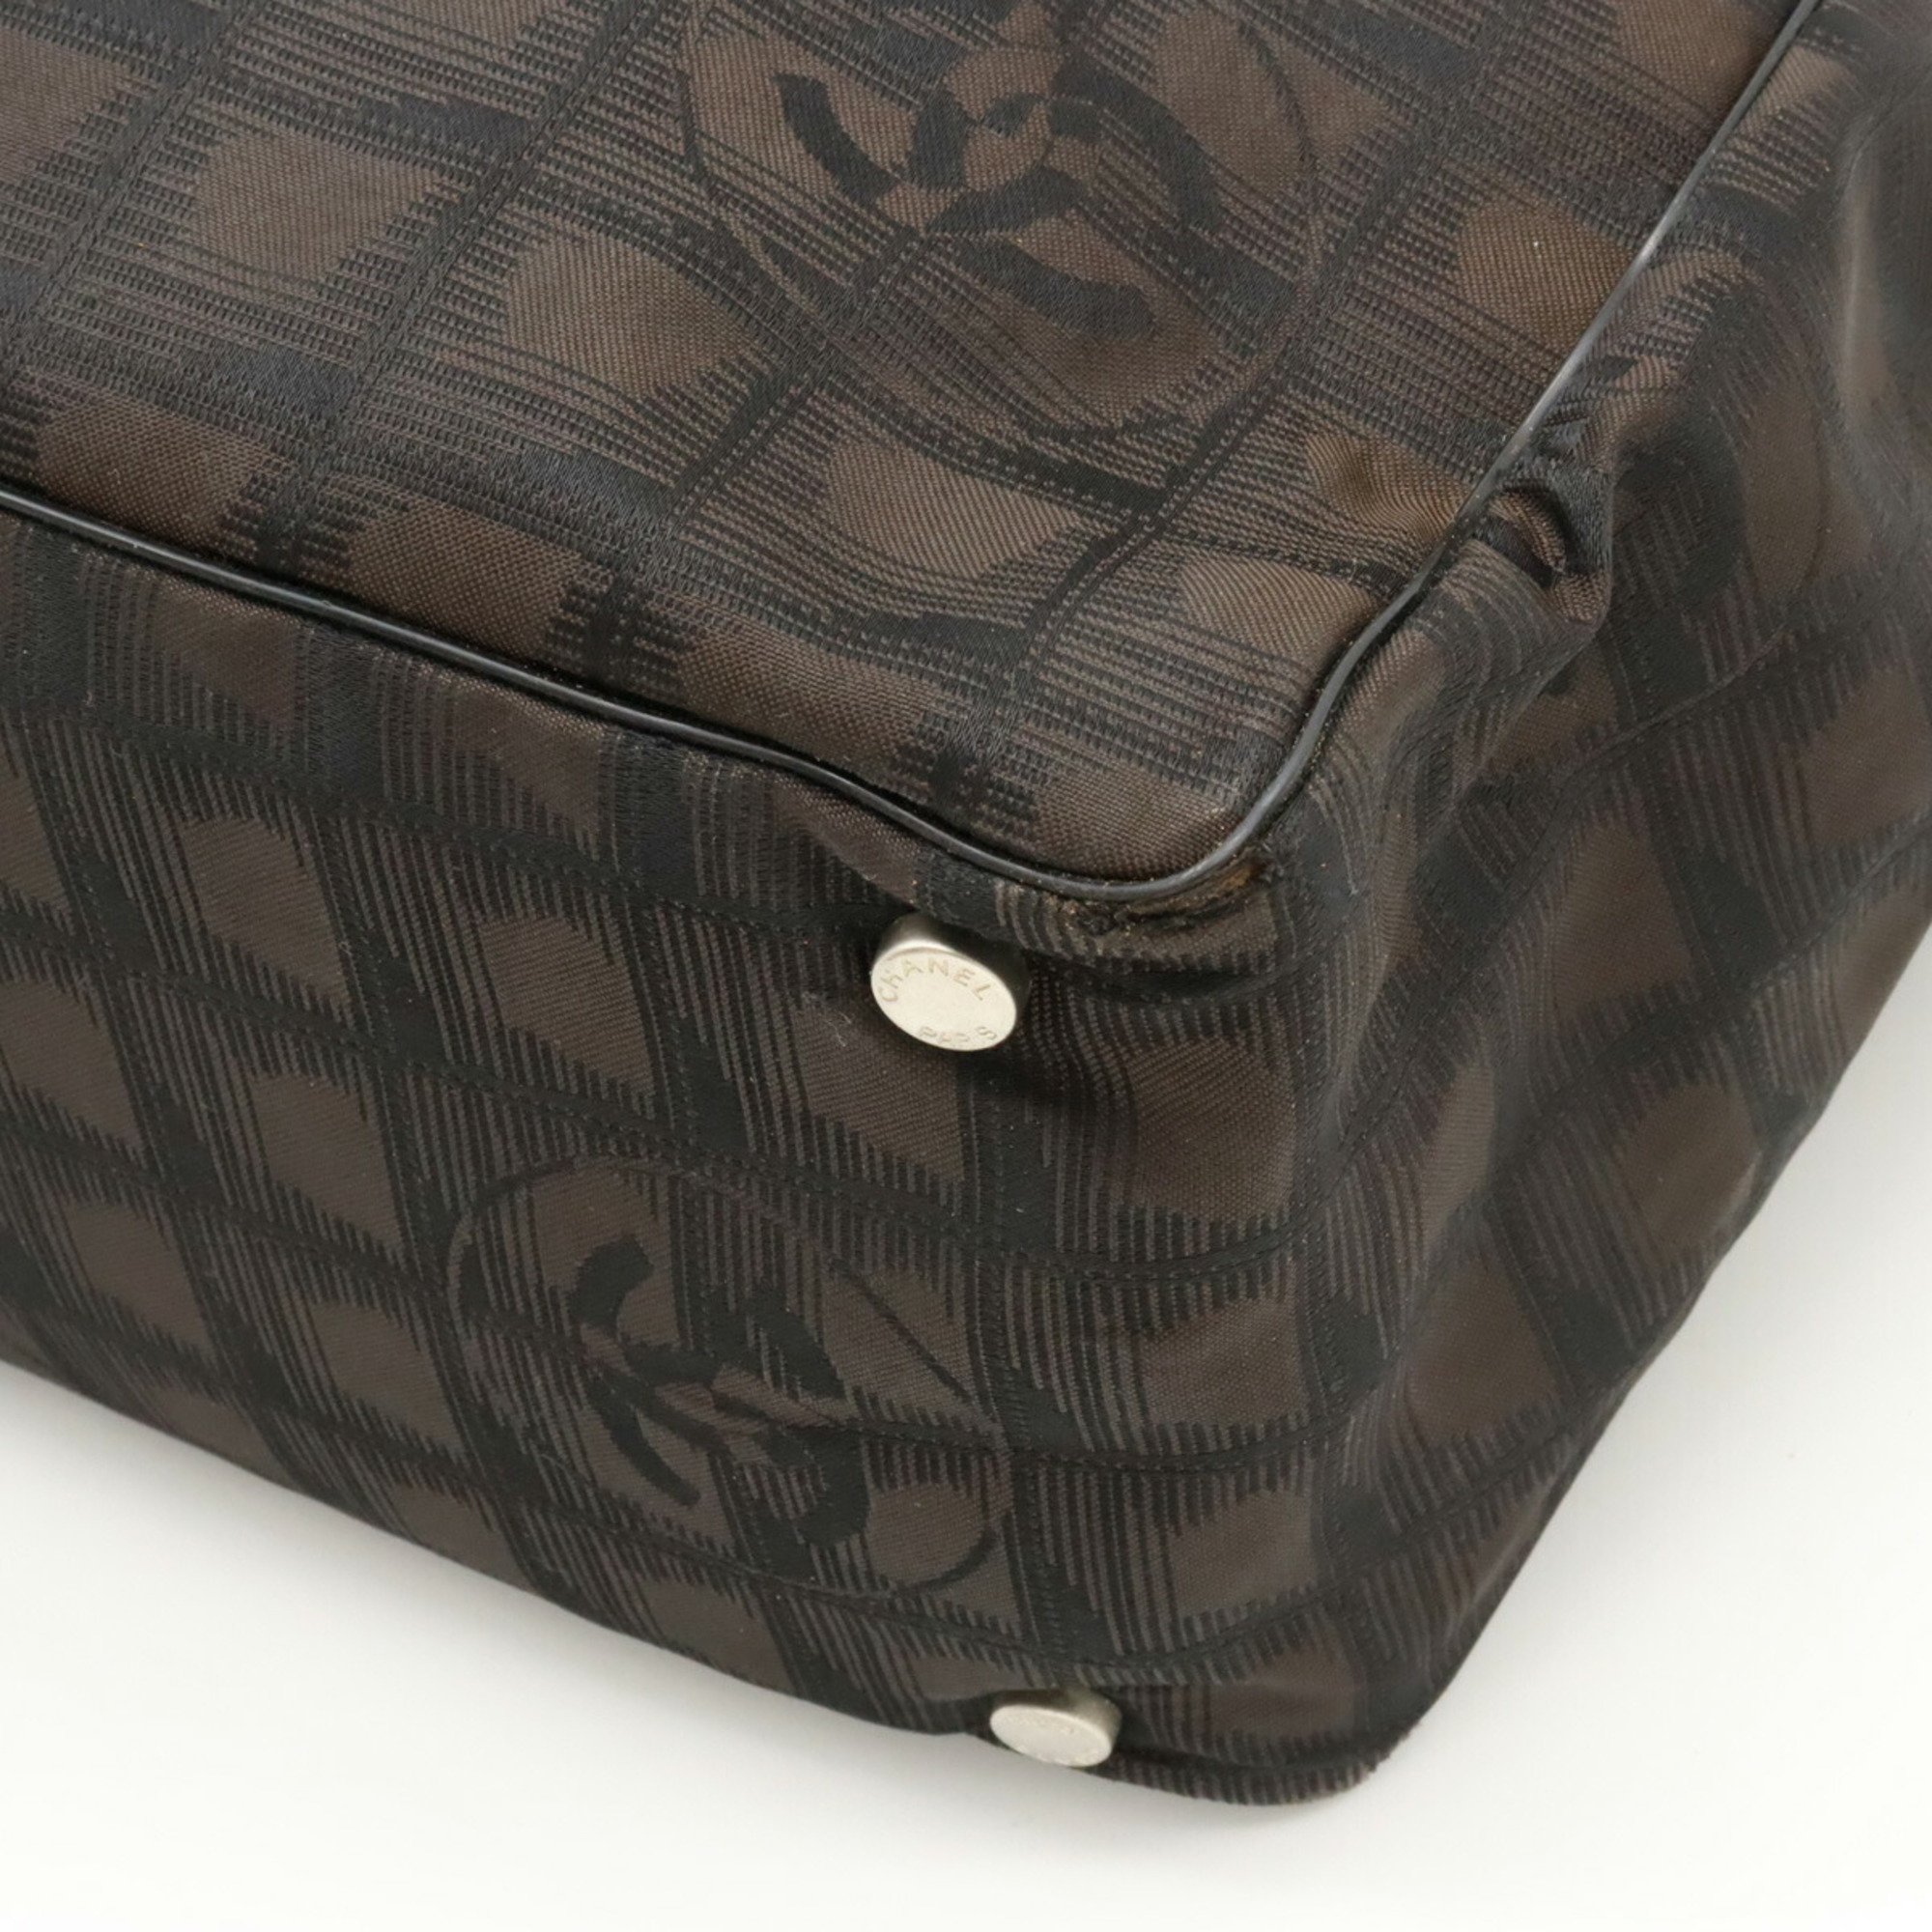 CHANEL New Travel Line Tote MM bag Shoulder Nylon jacquard Dark brown Black A15991